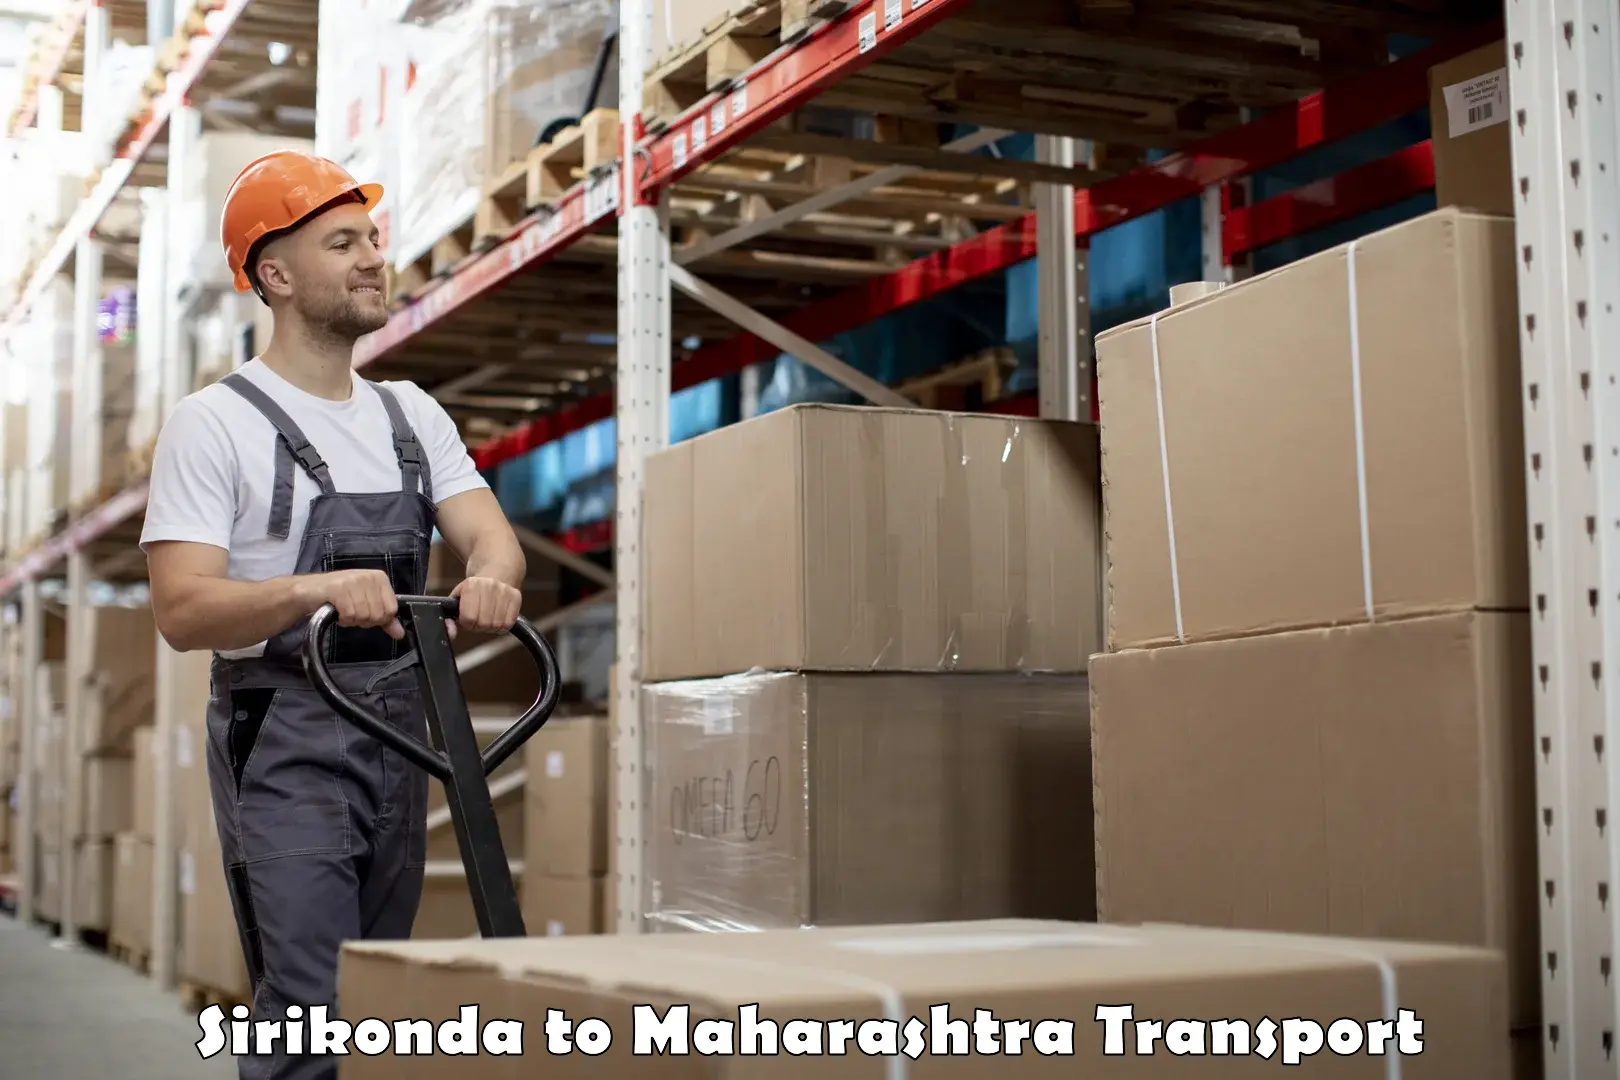 Container transport service Sirikonda to Maharashtra